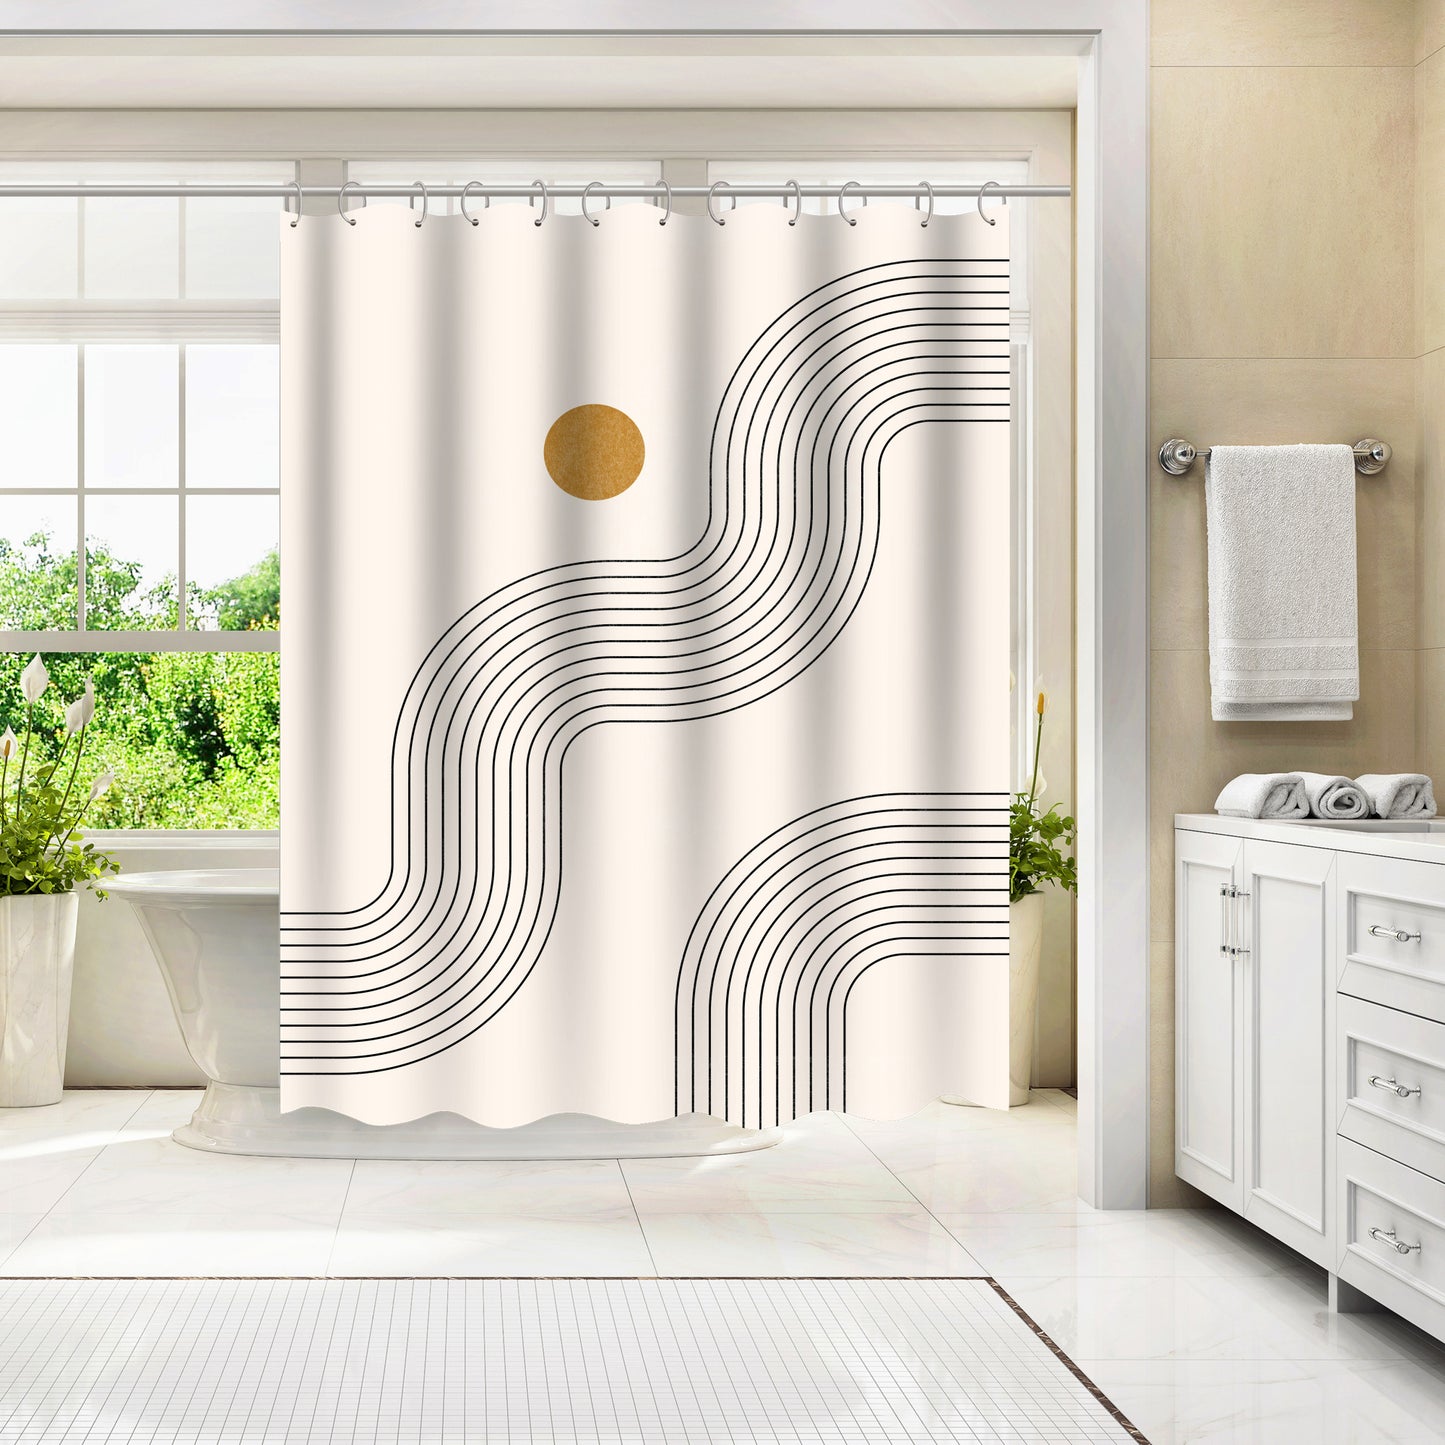 71" x 74" Abstract Shower Curtain with 12 Hooks, Boho Geometric Lines Part 3 by Tetyana Karankovska